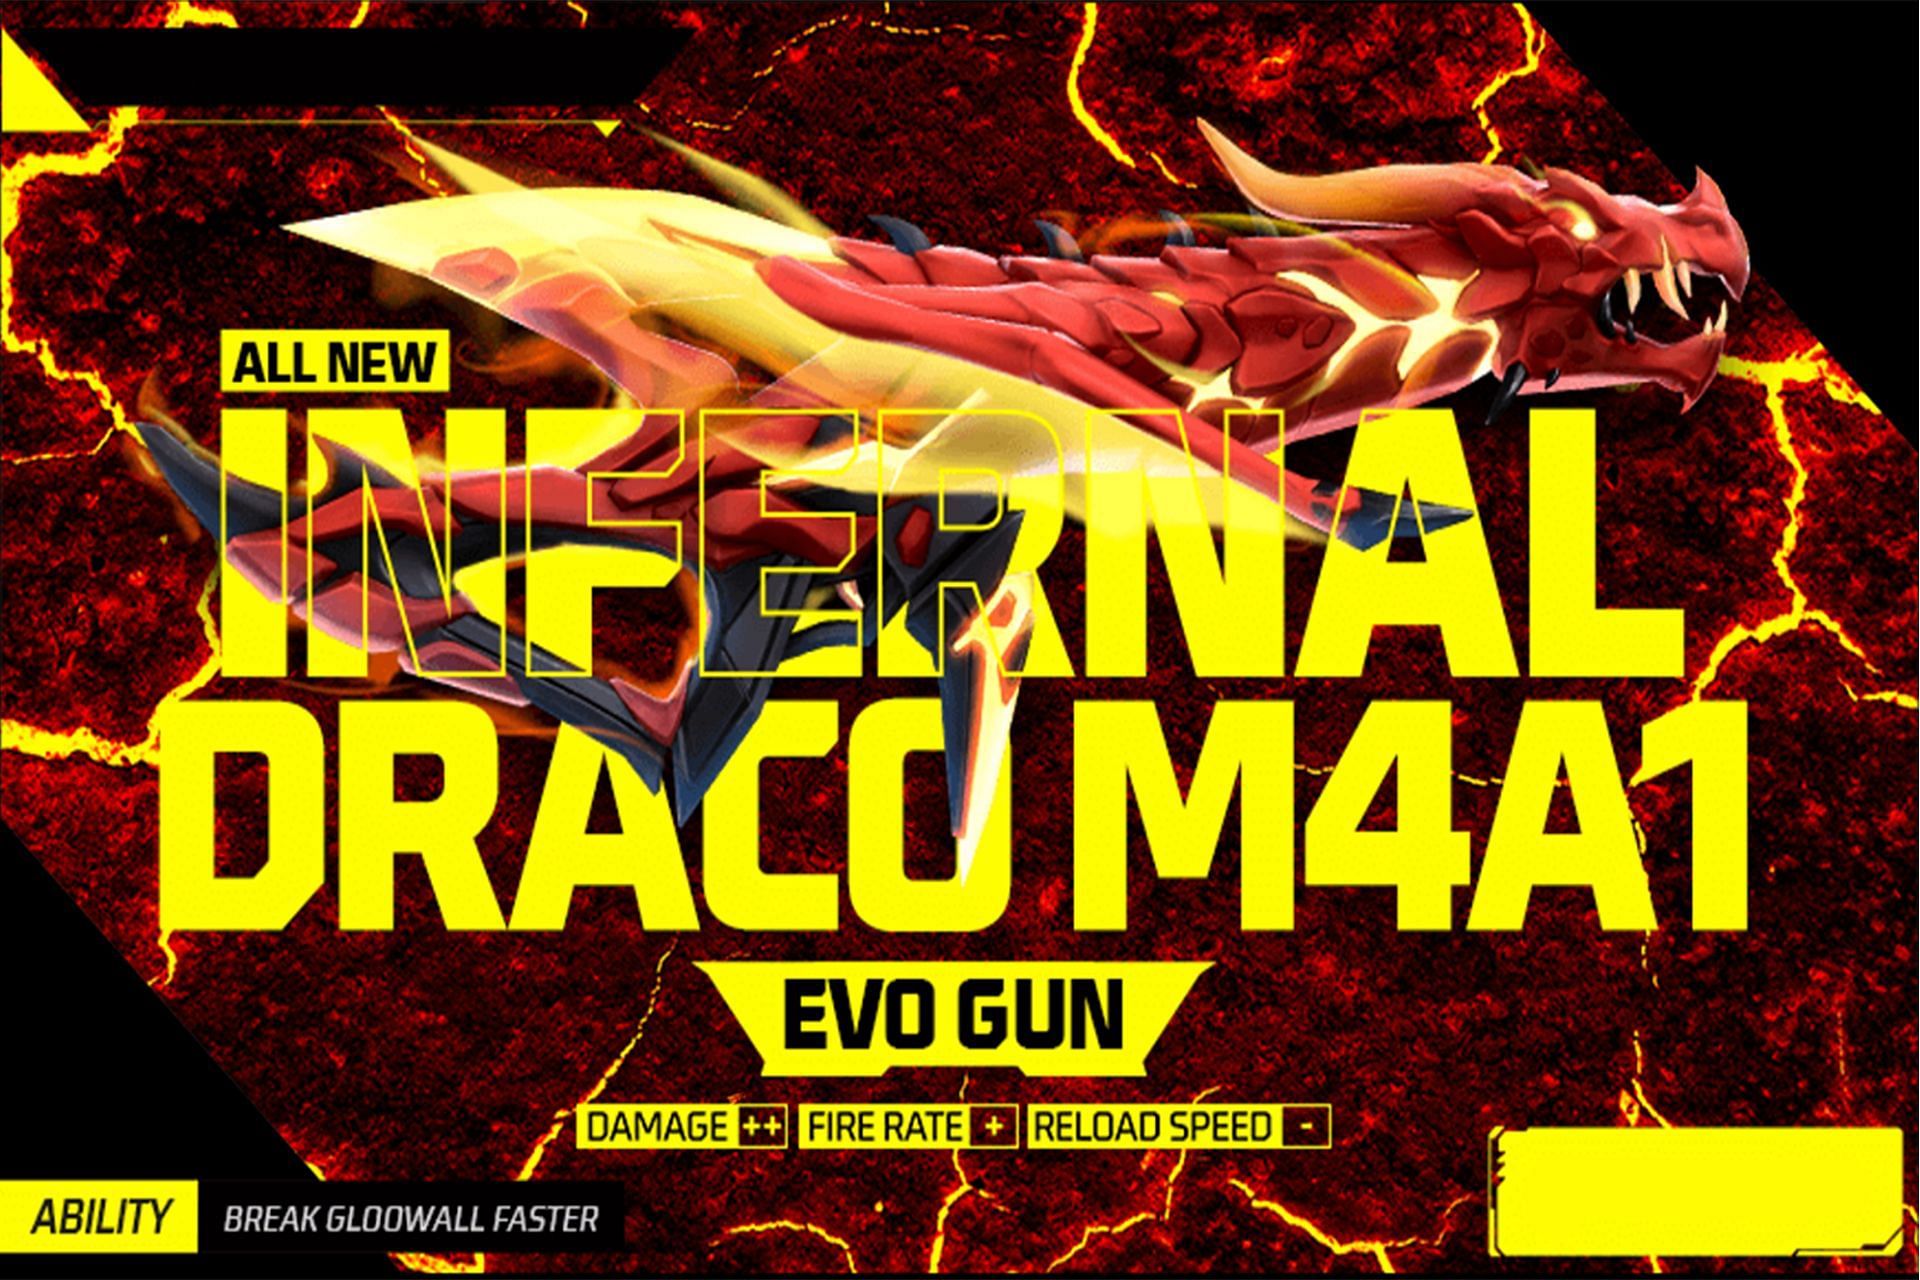 Infernal Draco M4A1 Evo gun skin has been released to Free Fire MAX (Image via Garena)